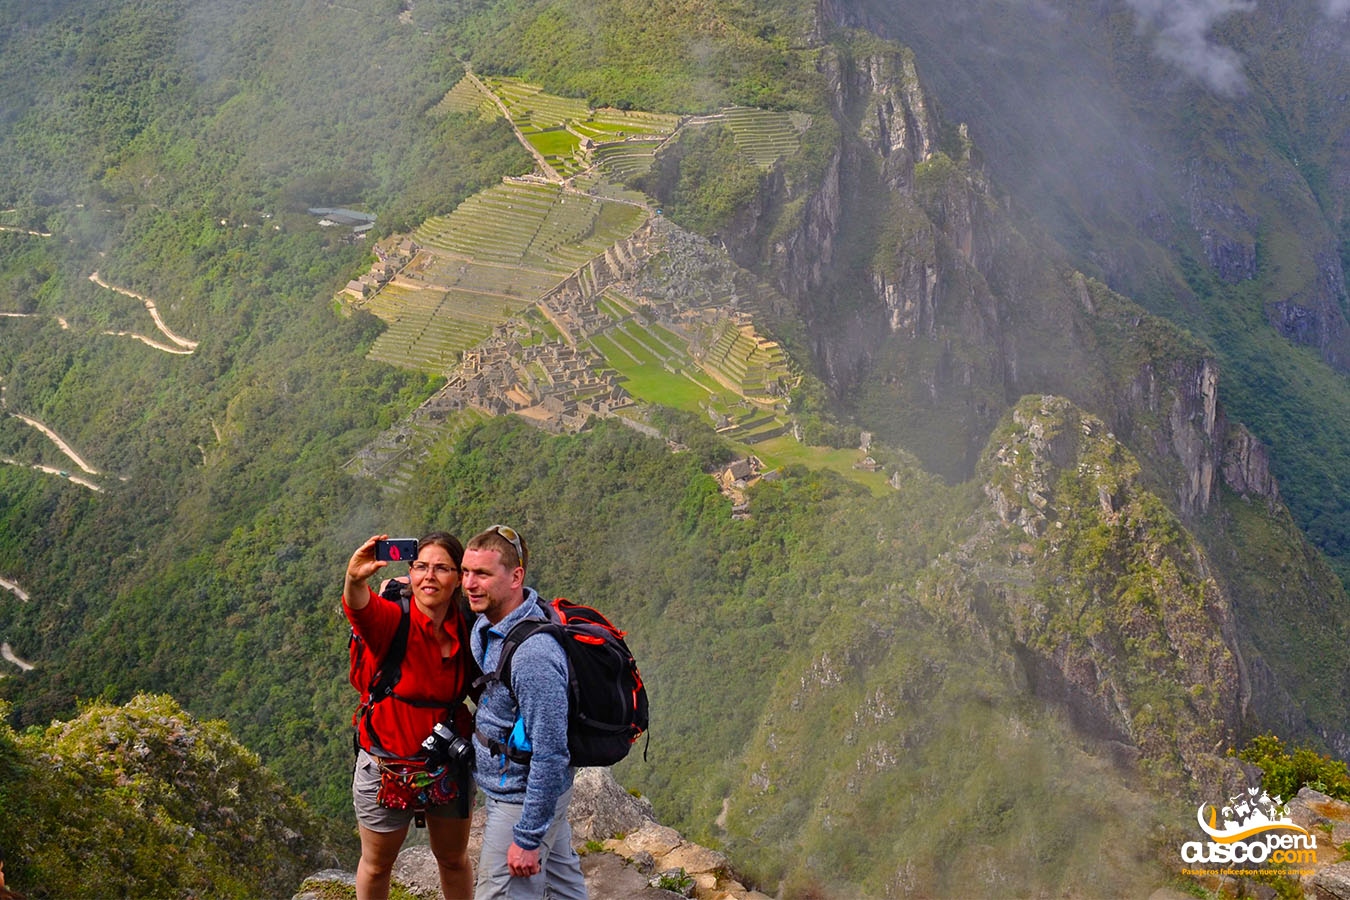 View from the summit of Huayna Picchu Mountain. Source: CuscoPeru.com